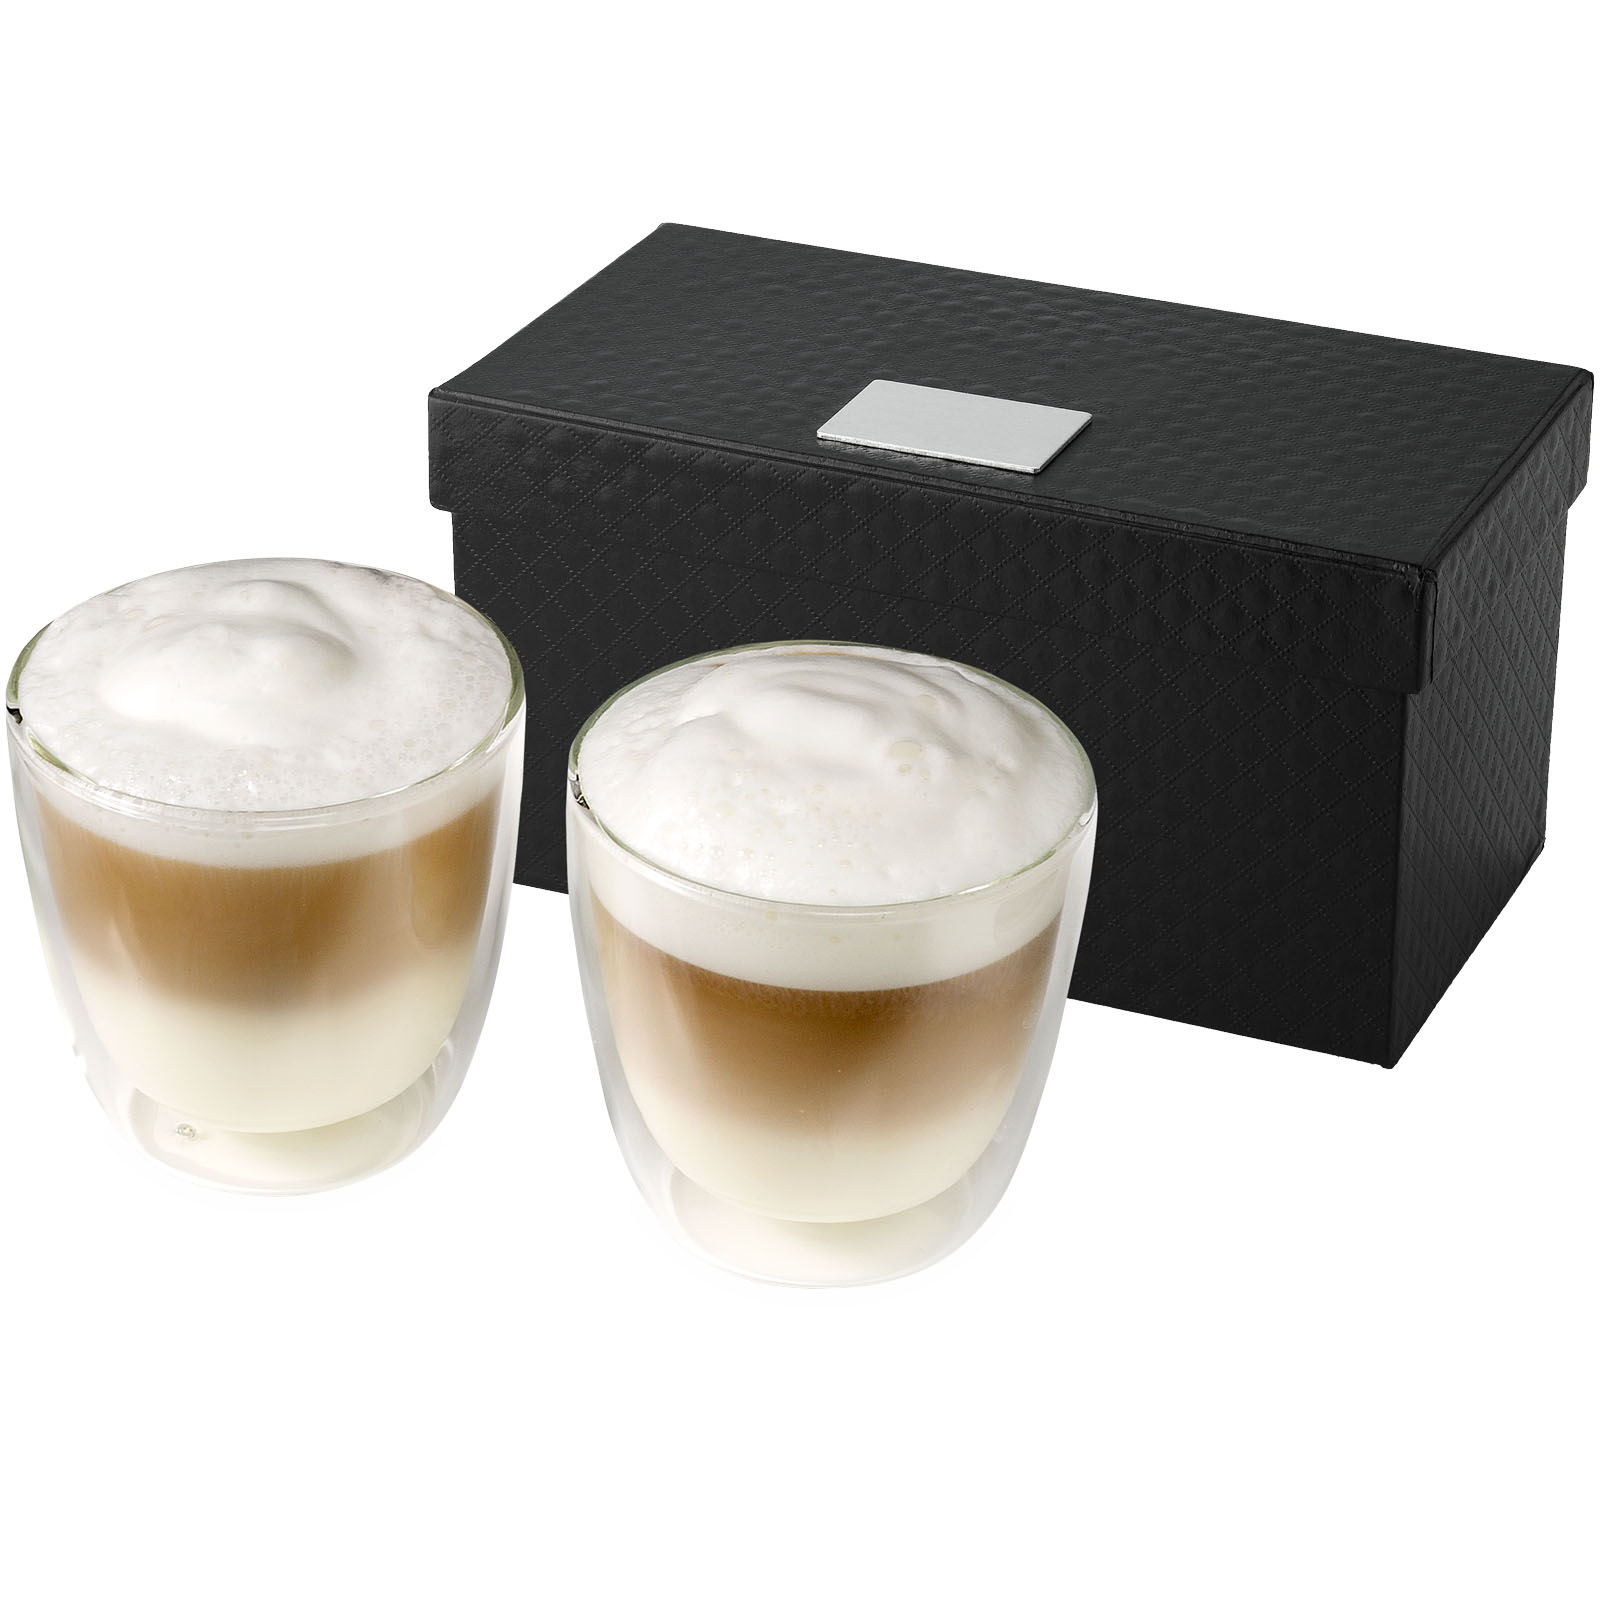 Drinkware - Boda 2-piece glass coffee cup set